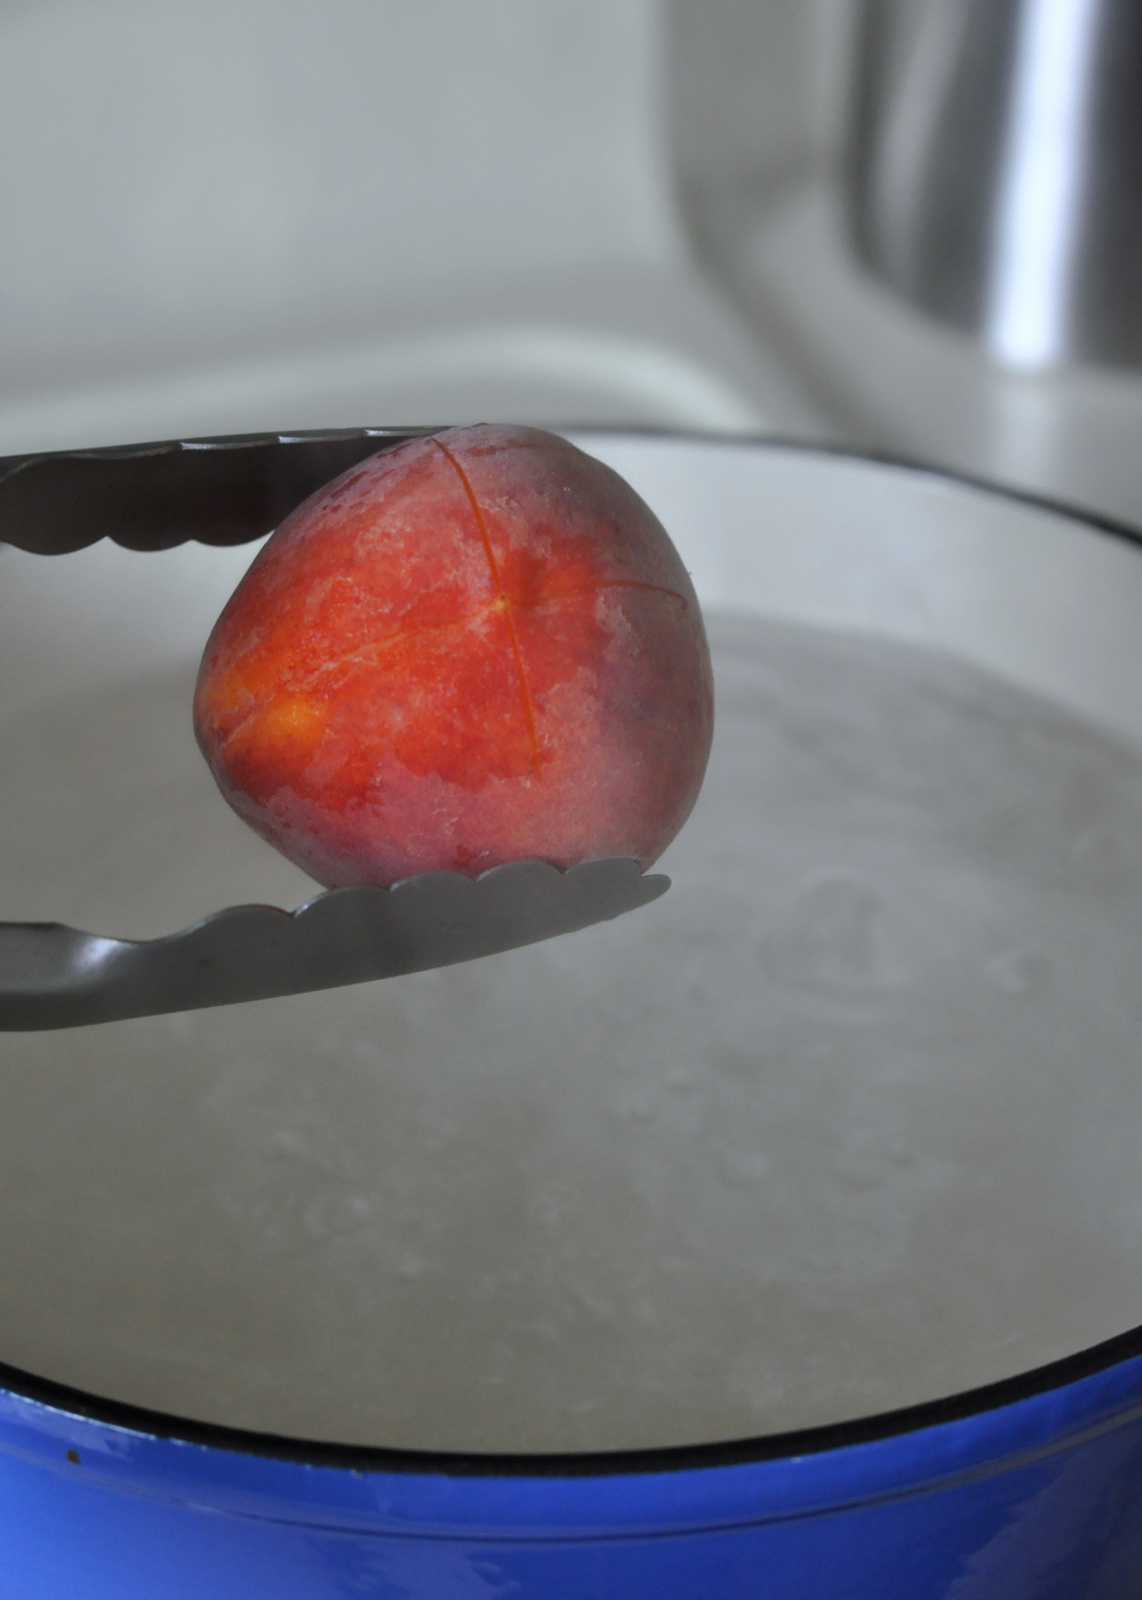 How To: Peel Peaches | Taste As You Go